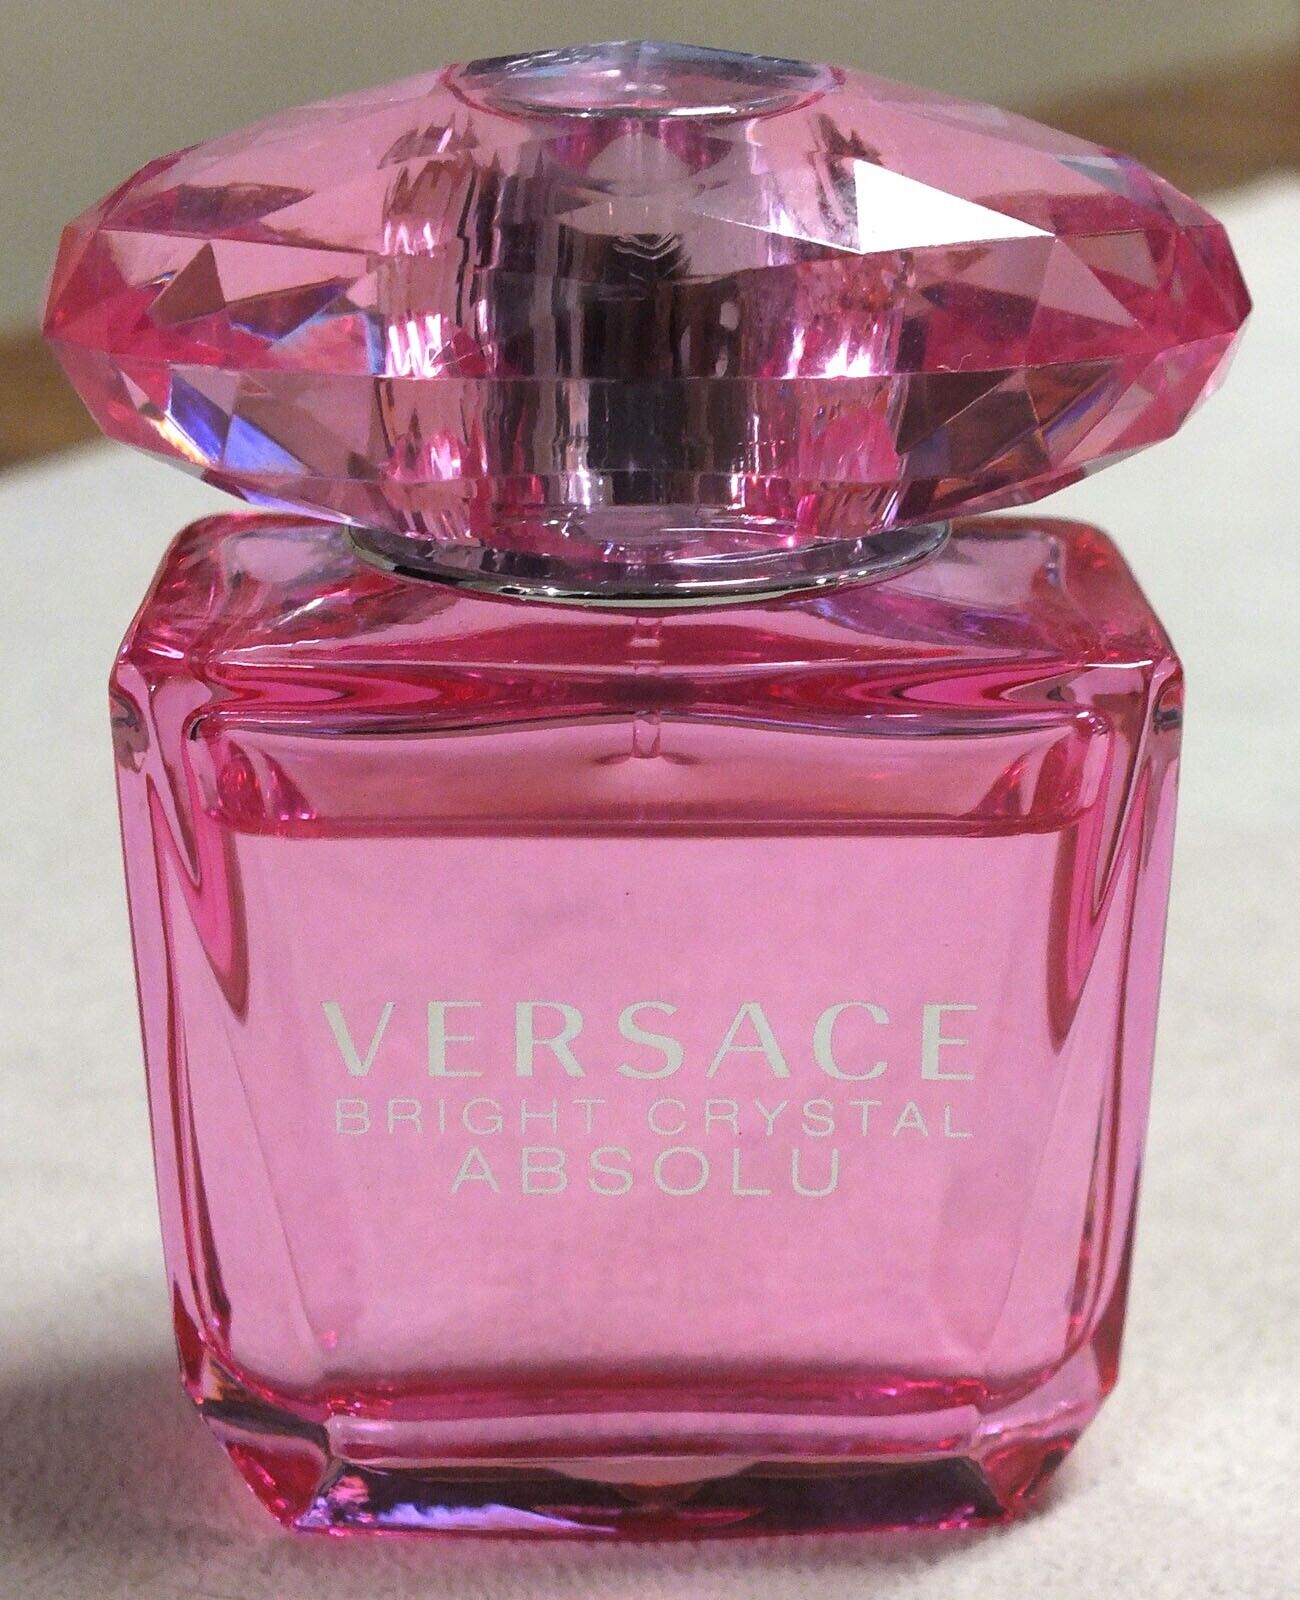 Versace Bright Crystal Absolu EDP Eau de Parfum Perfume 1oz/30ml